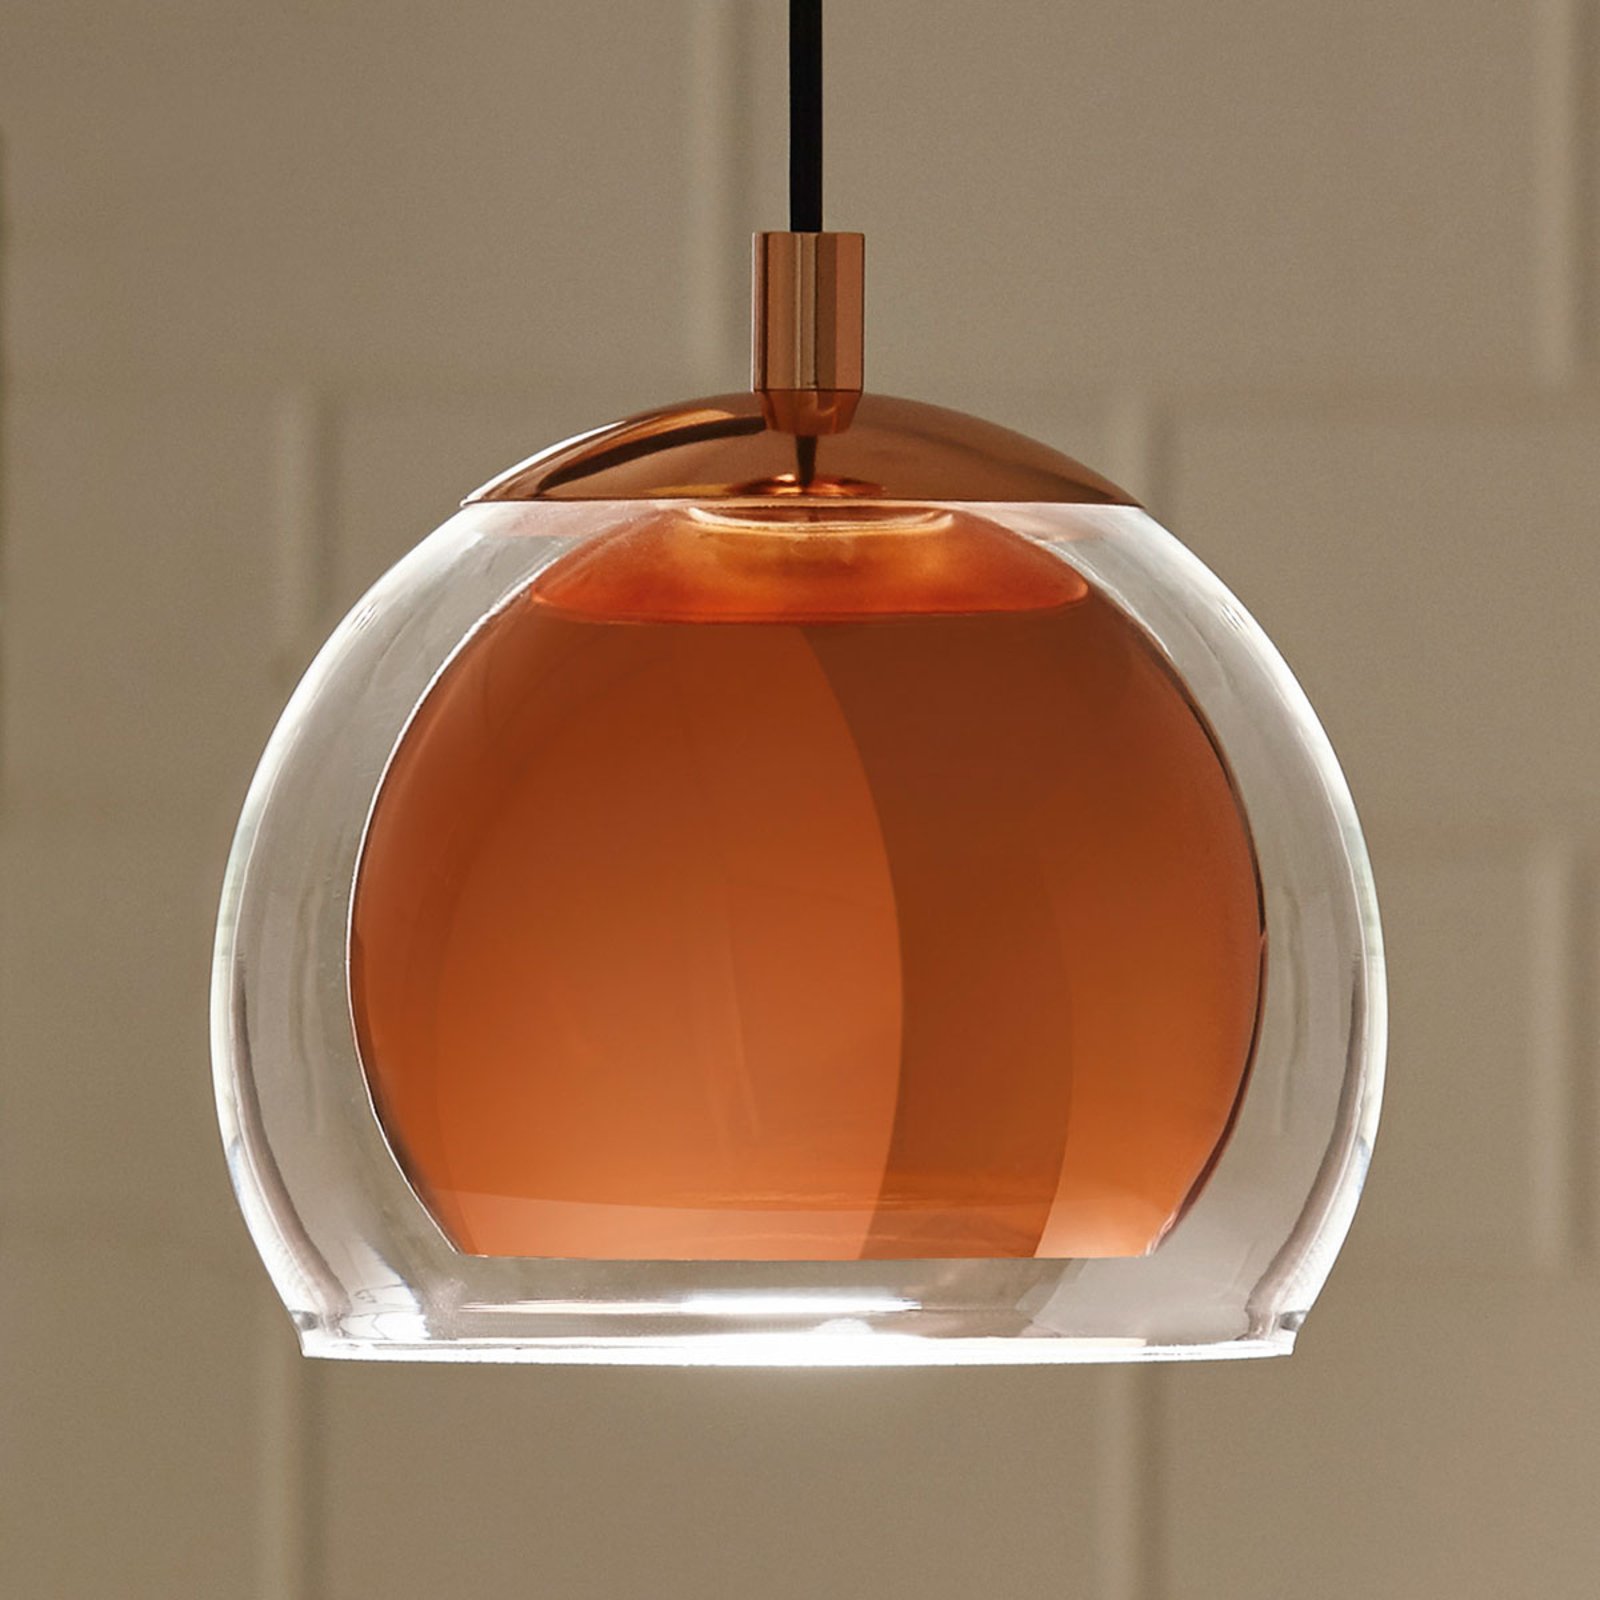 Rocamar hanging light 1-bulb in copper